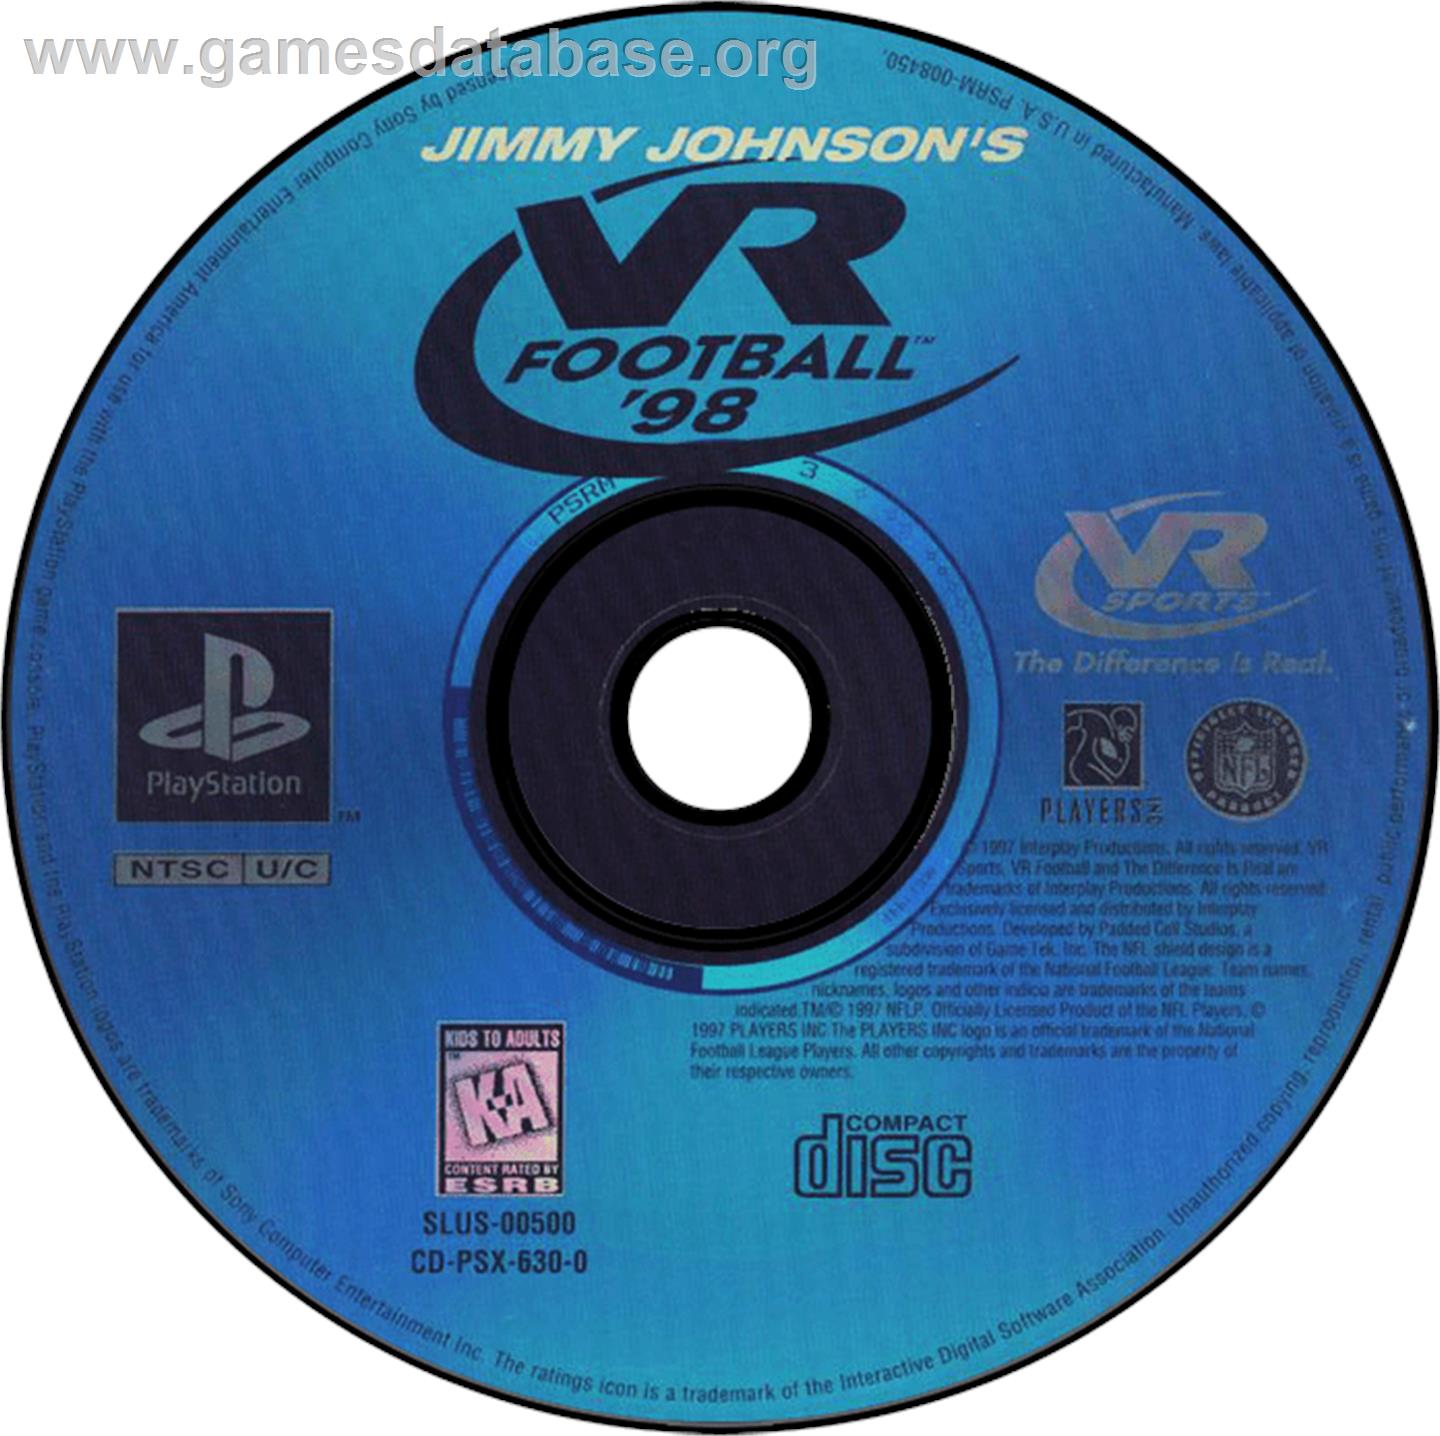 Jimmy Johnson's VR Football '98 - Sony Playstation - Artwork - Disc